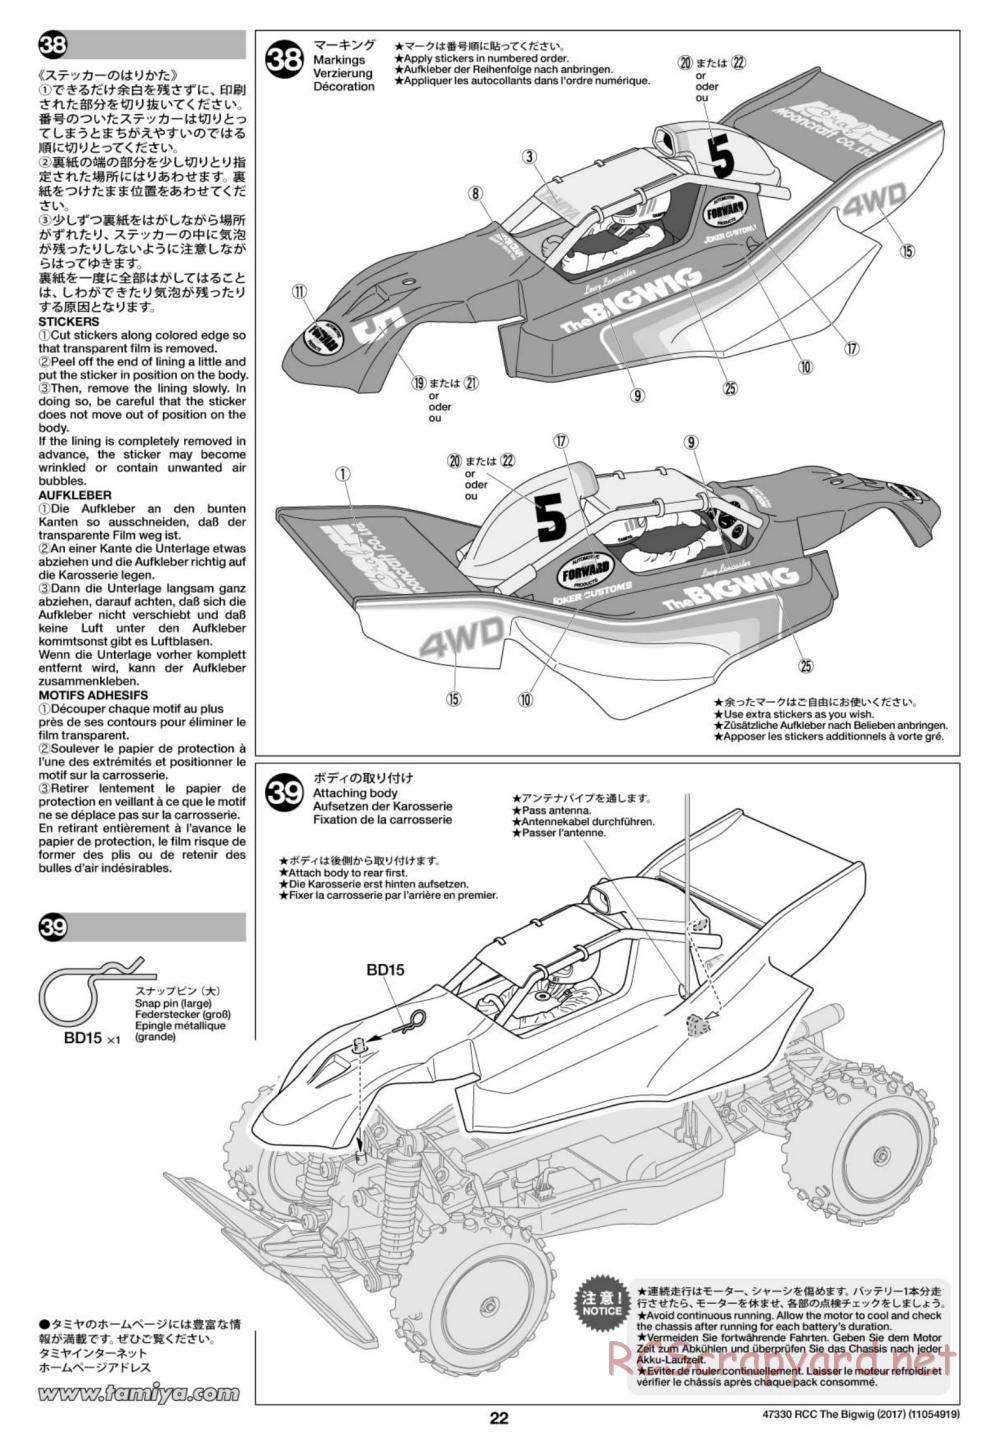 Tamiya - The Bigwig 2017 Chassis - Manual - Page 22